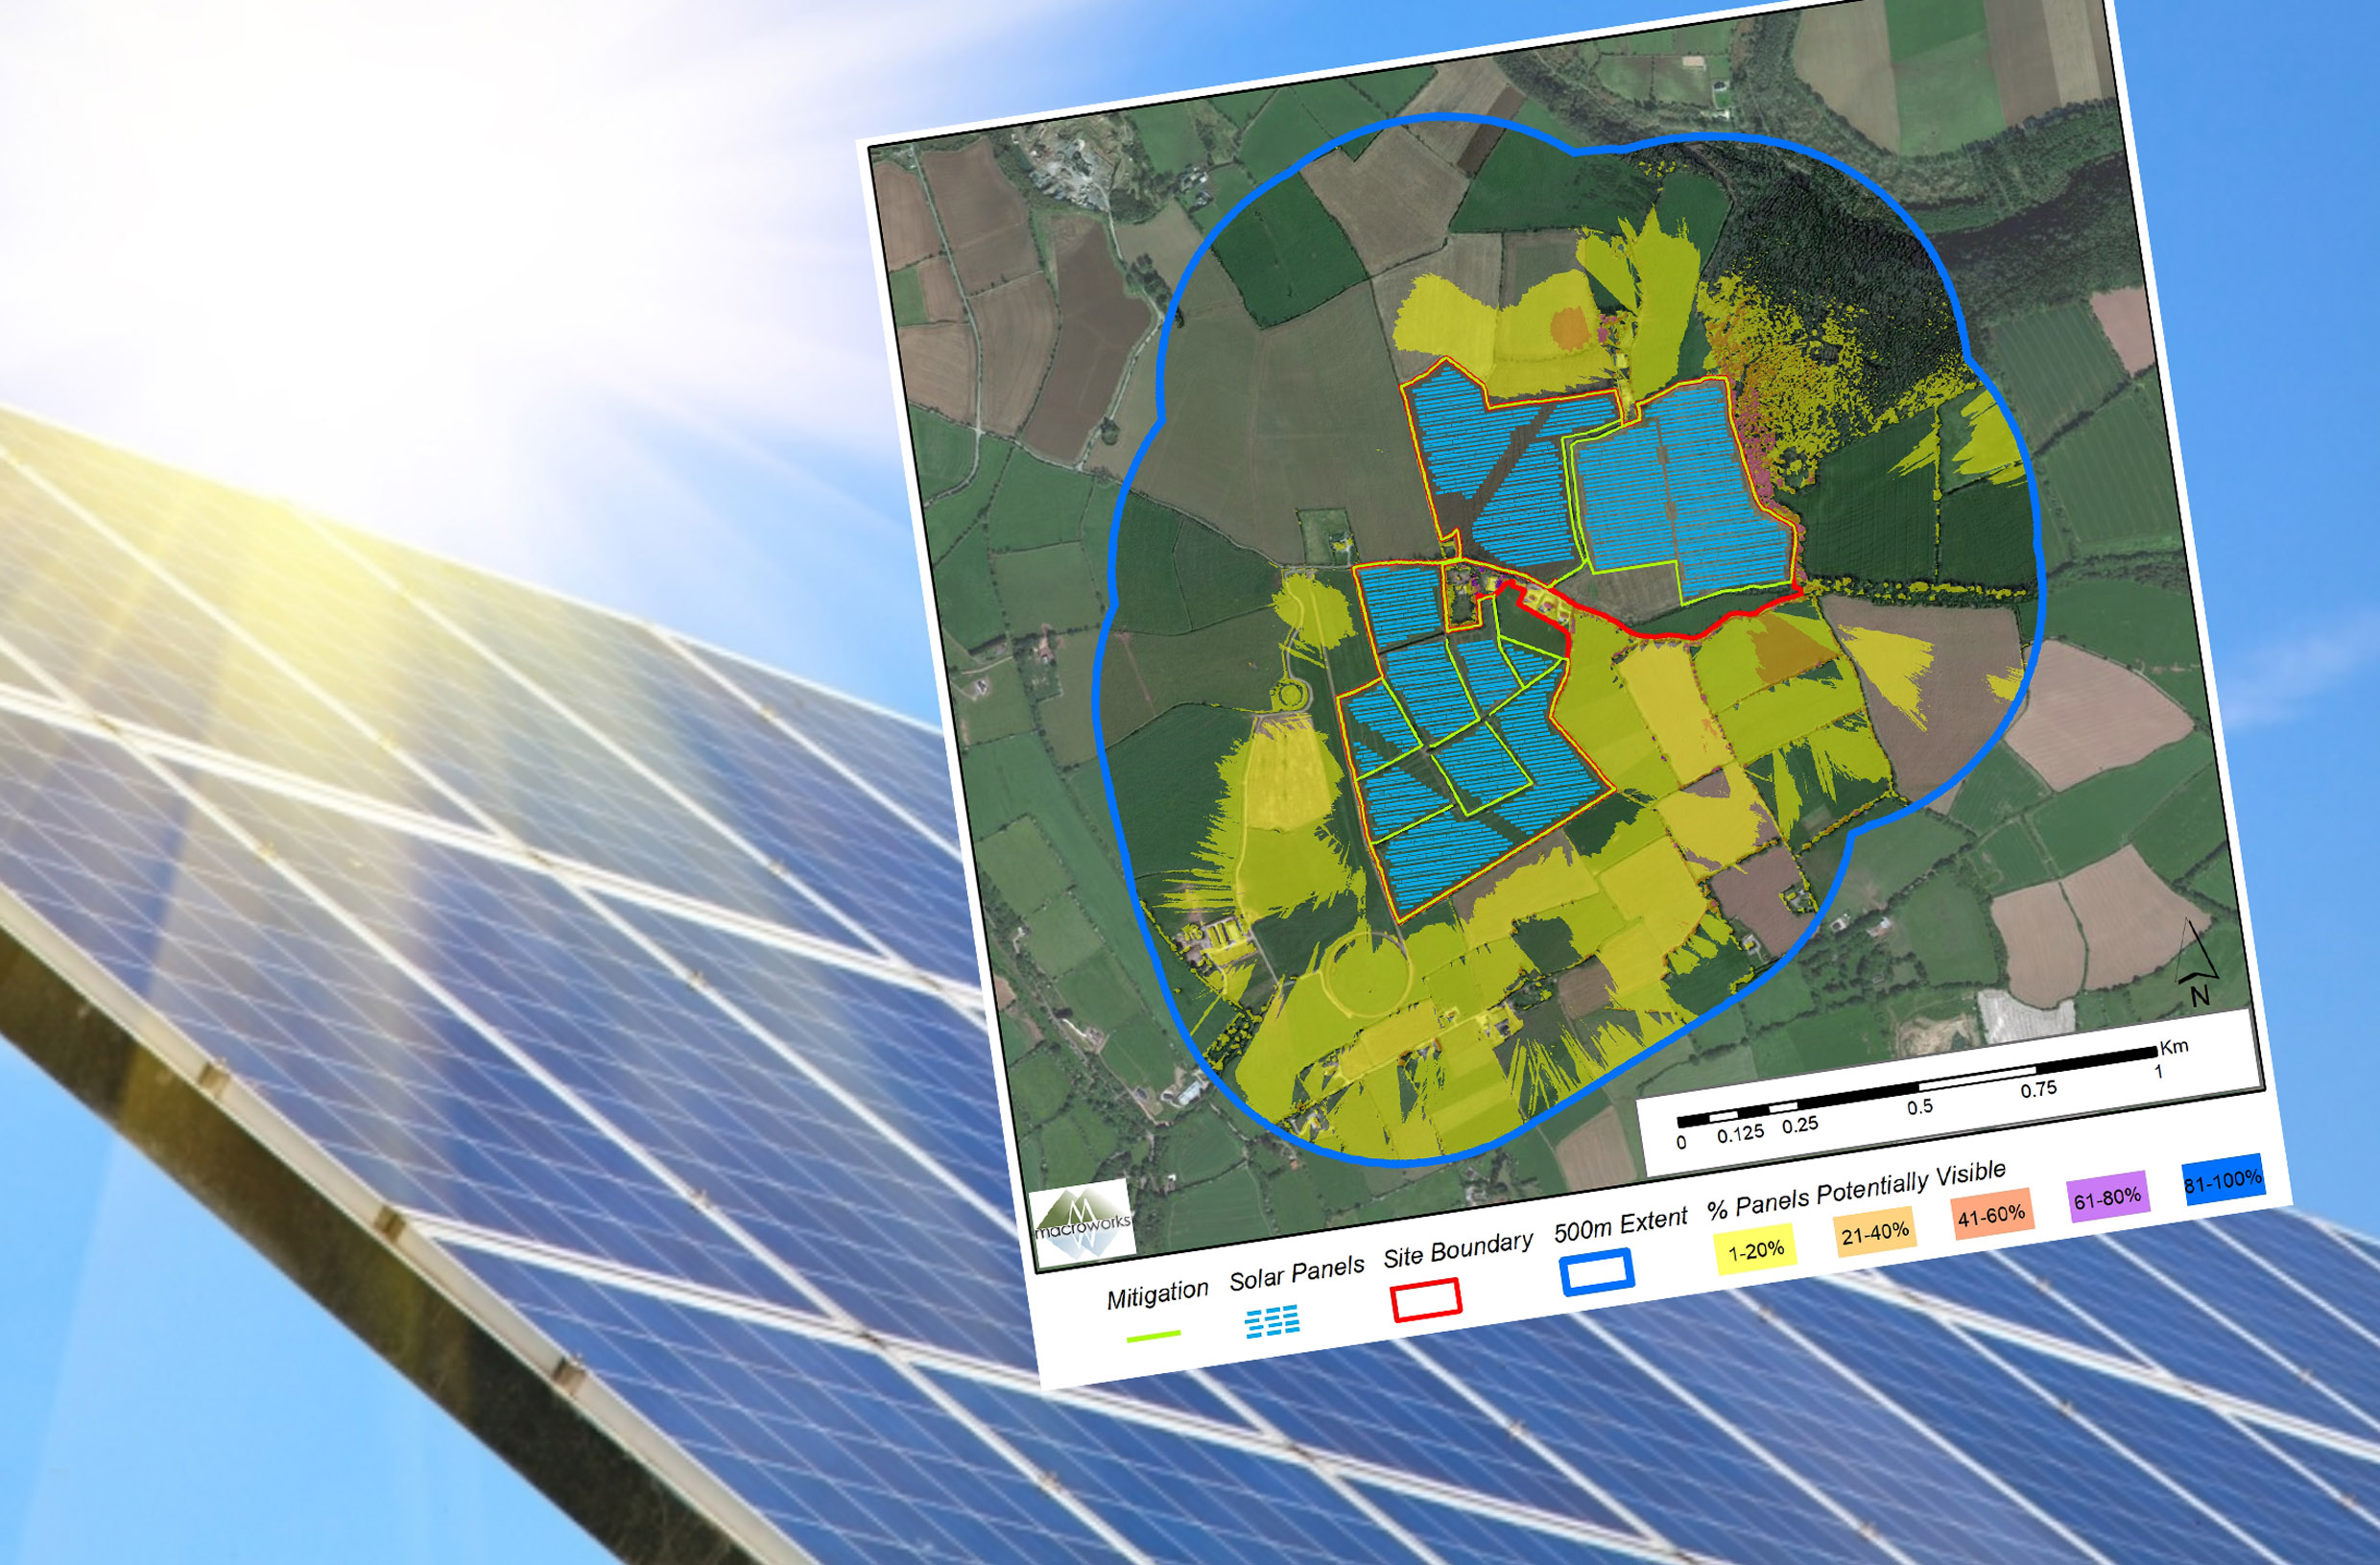 Terrain Mapping Aid Visual Impact Assessment of Solar Farms